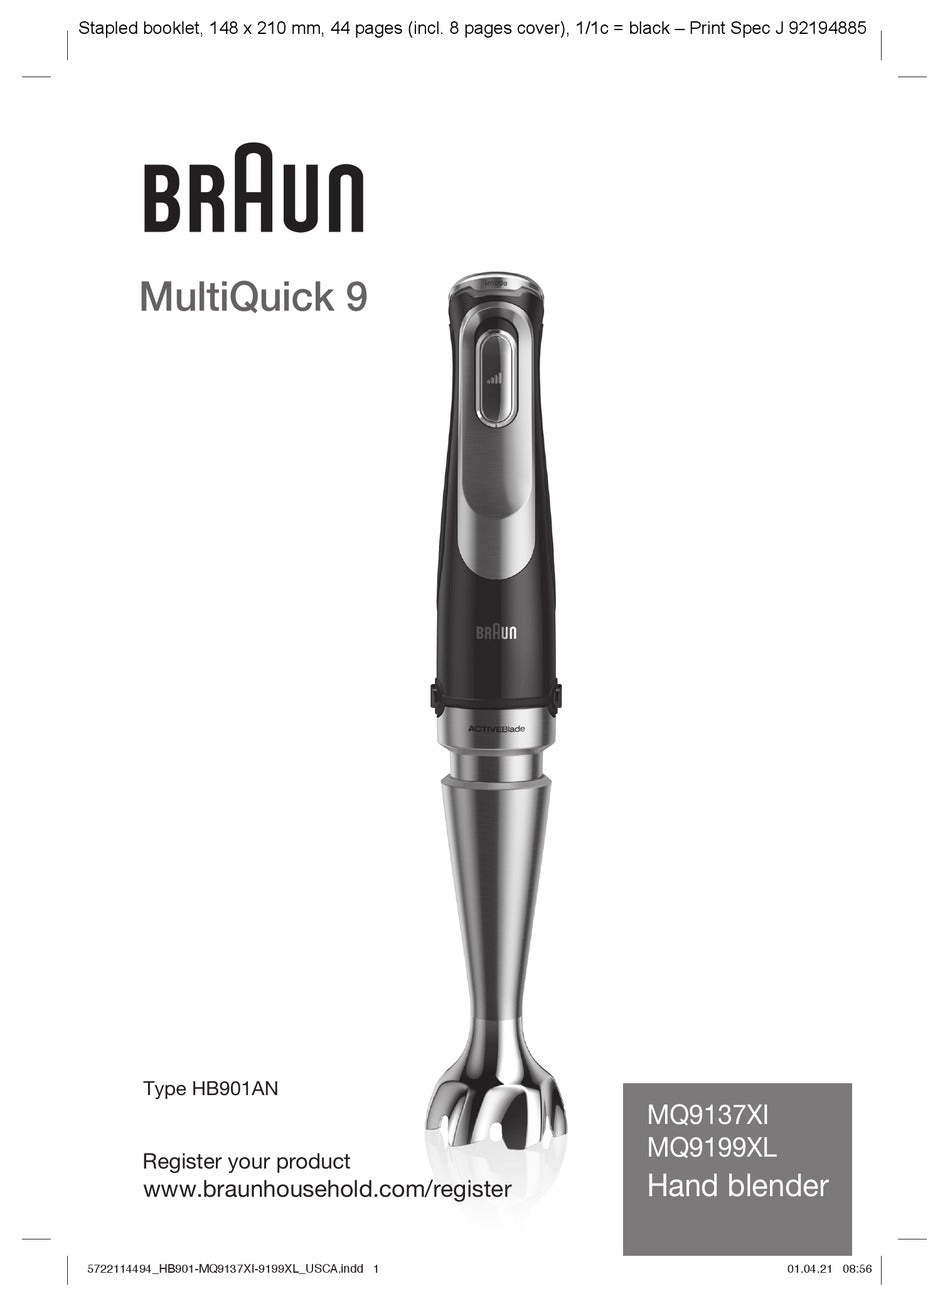 Braun - MultiQuick 9 Hand Blender 1200 Watts - Black